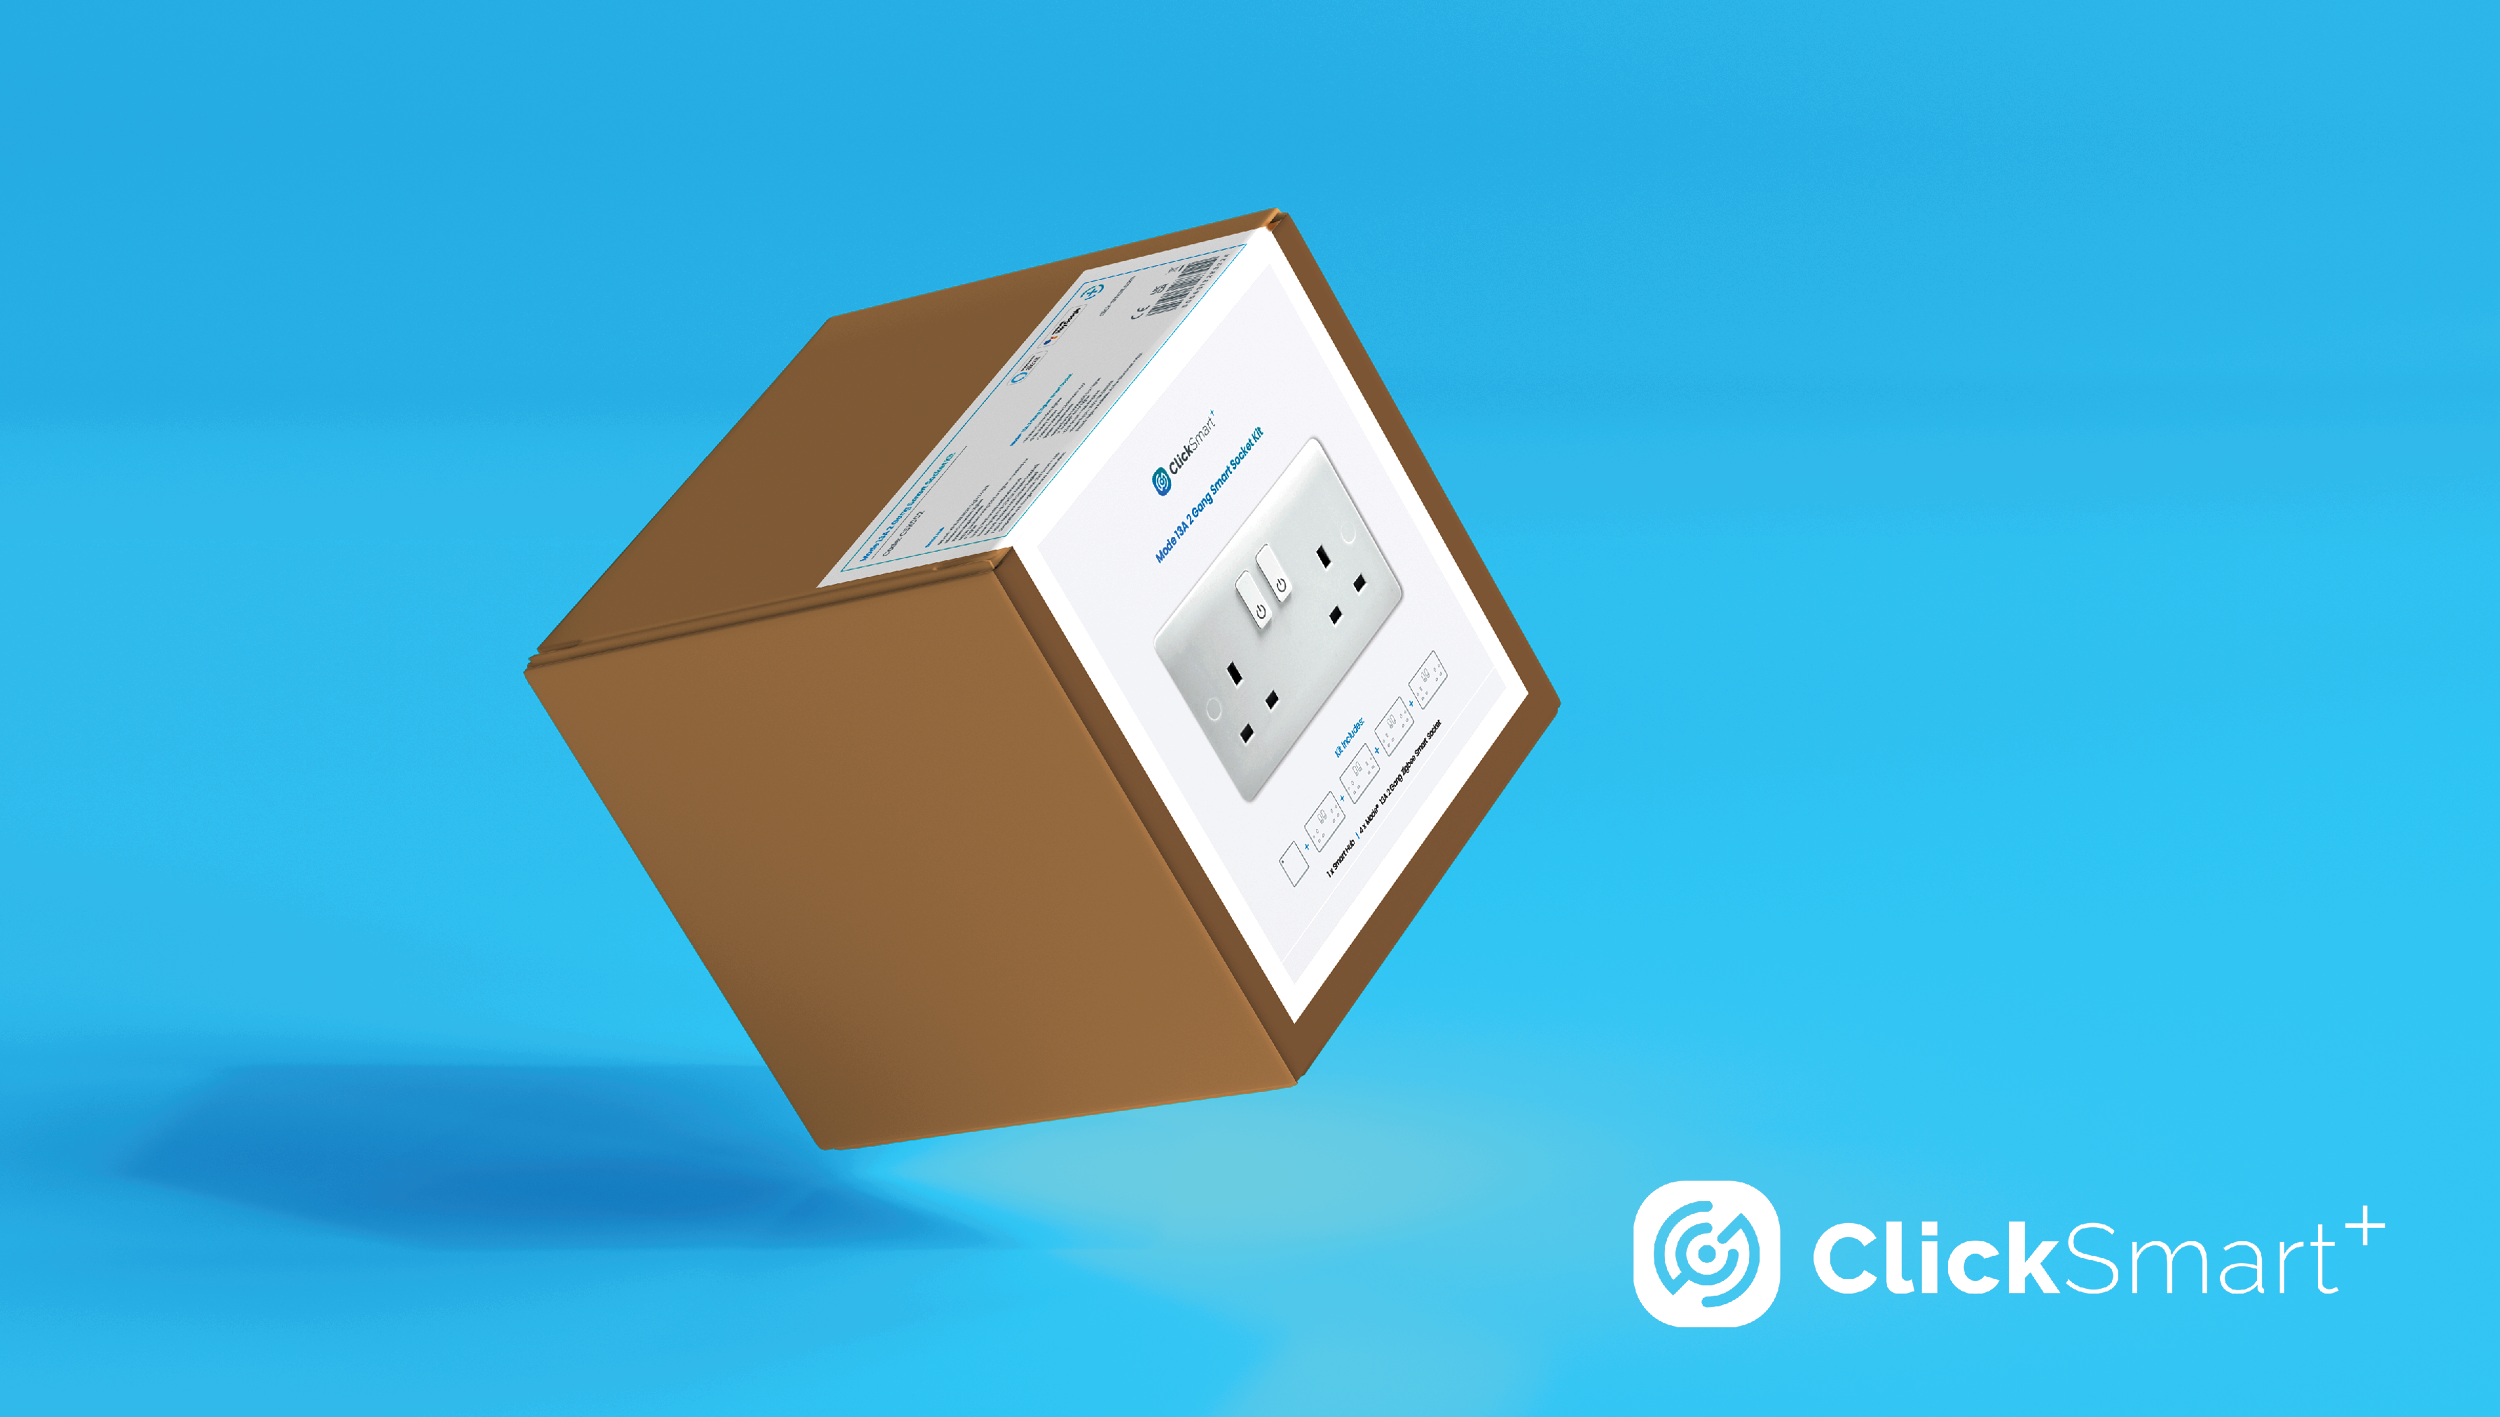 New Smart Socket Kits added to ClickSmart+ range